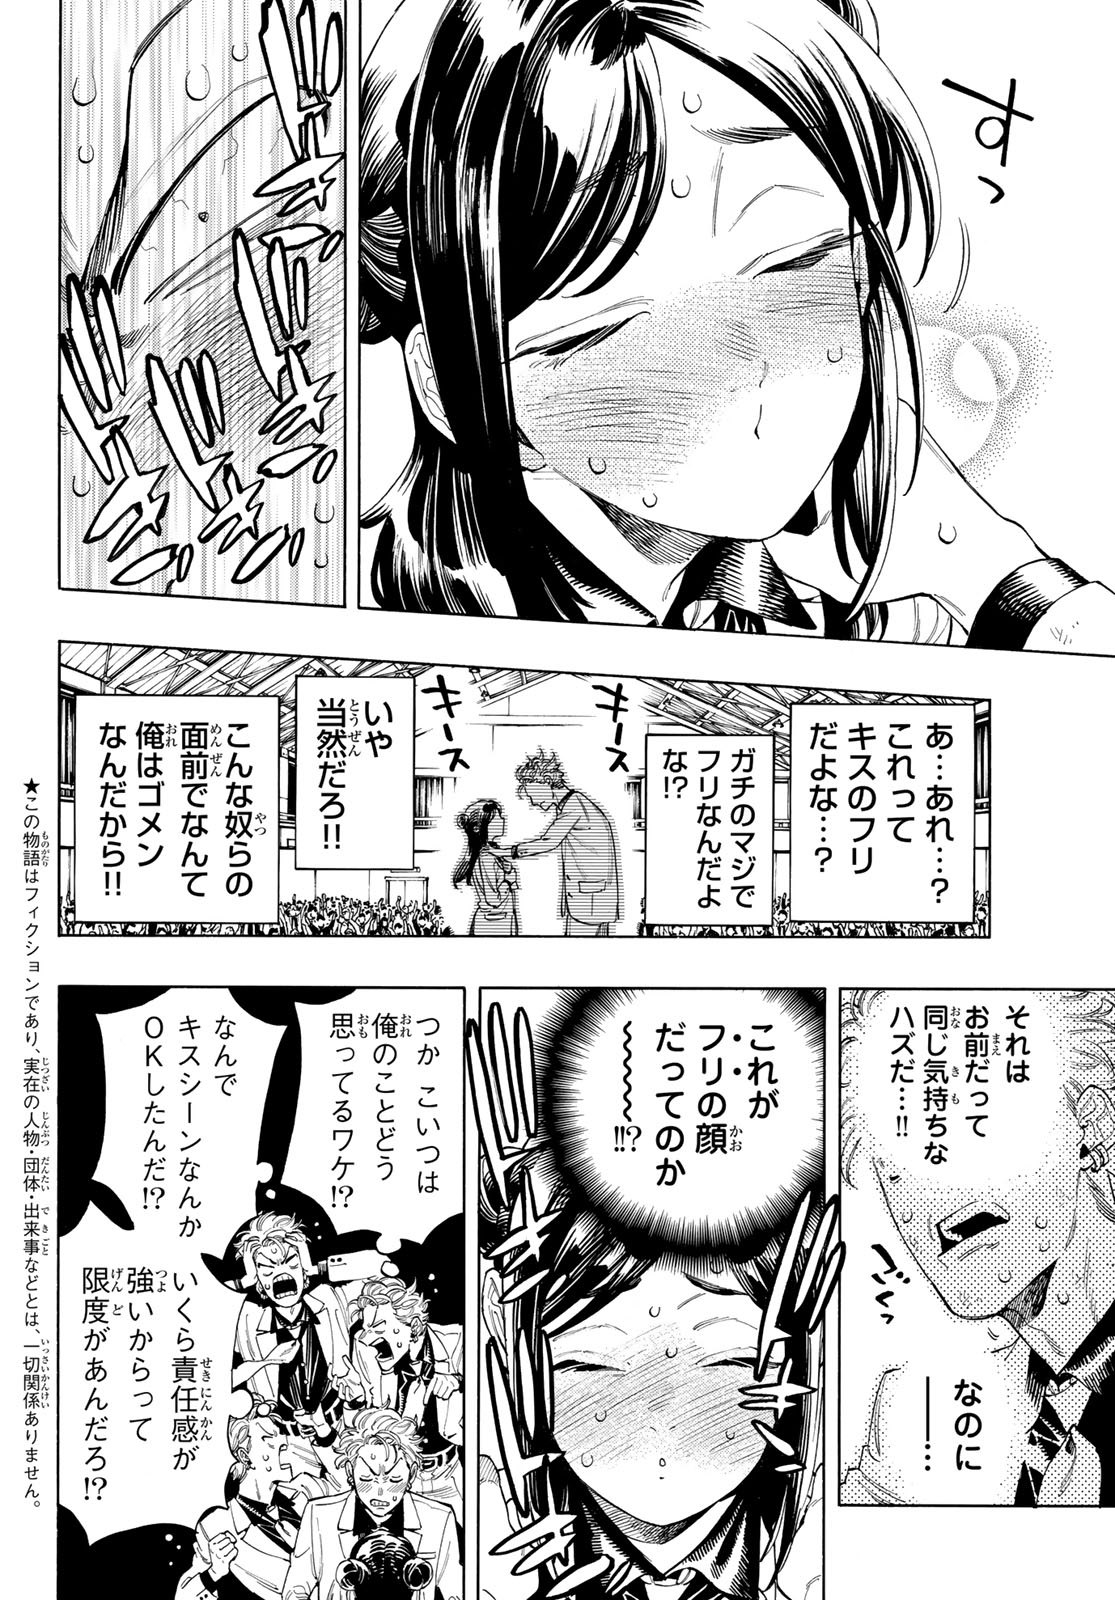 Akabane Honeko no Bodyguard - Chapter 65 - Page 2